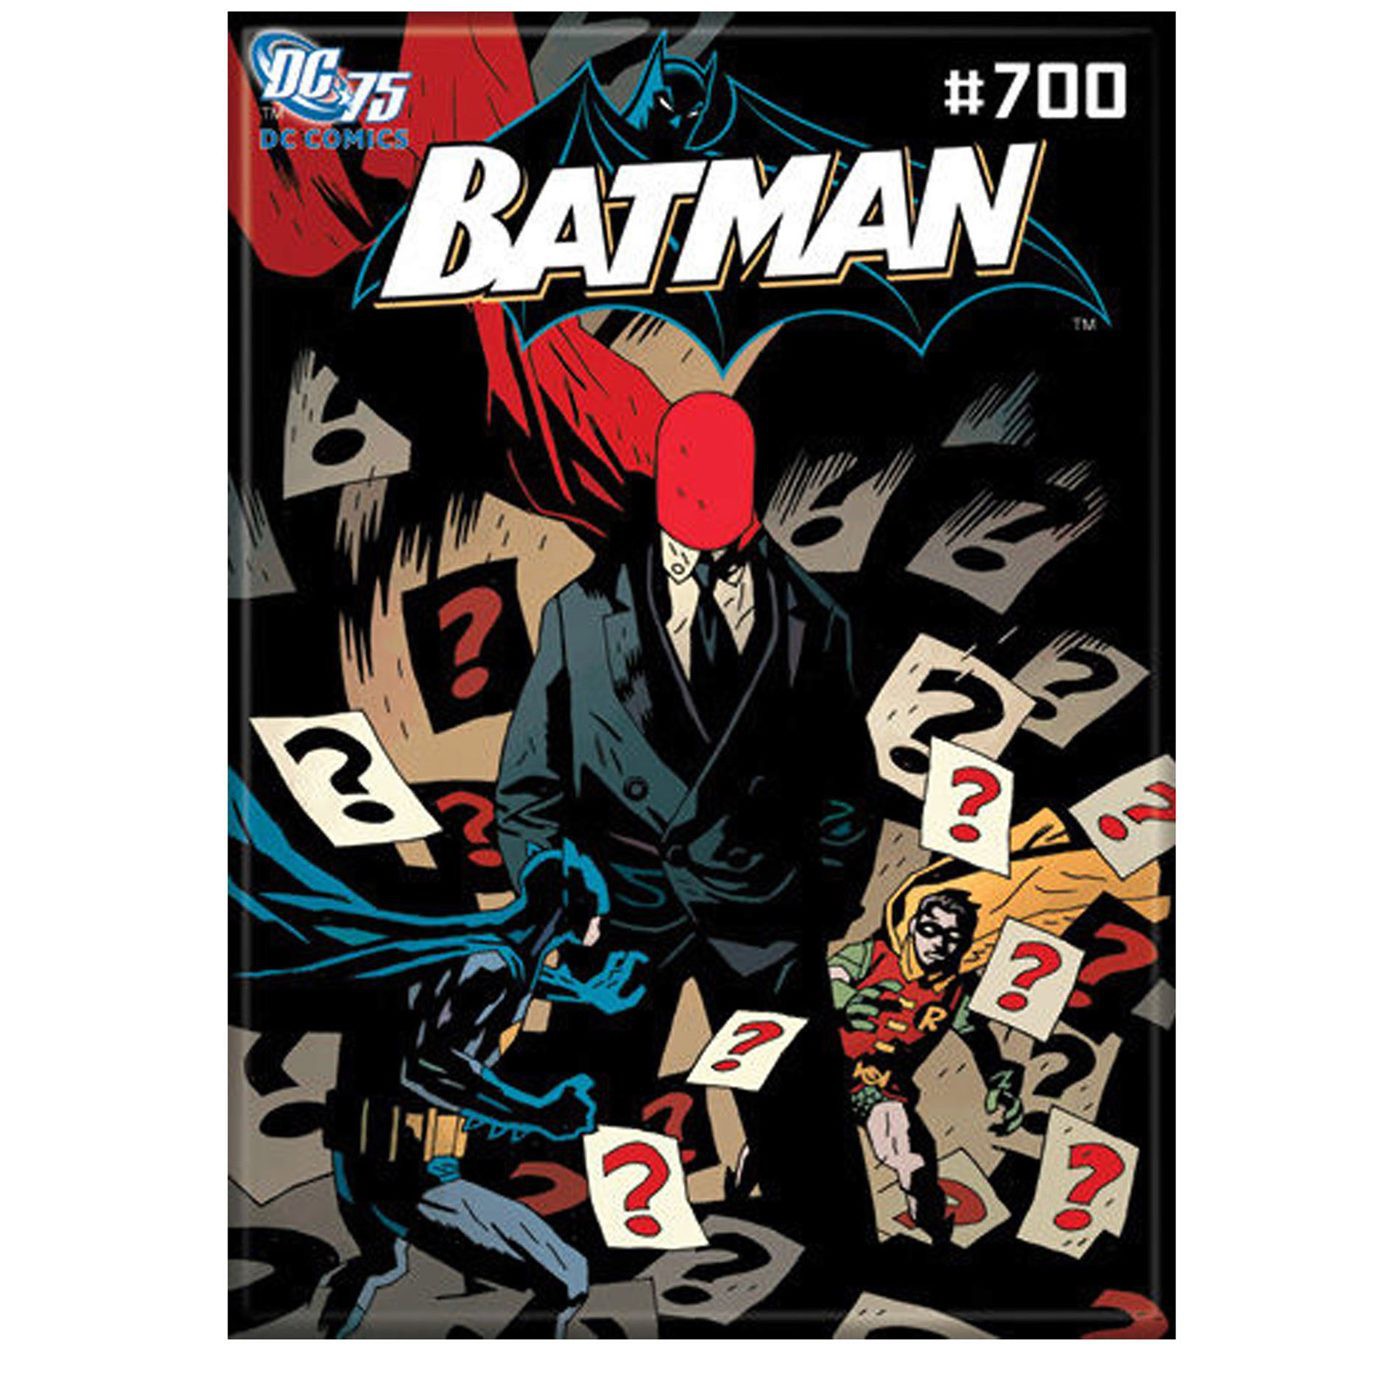 Batman #700 Comic Cover Magnet